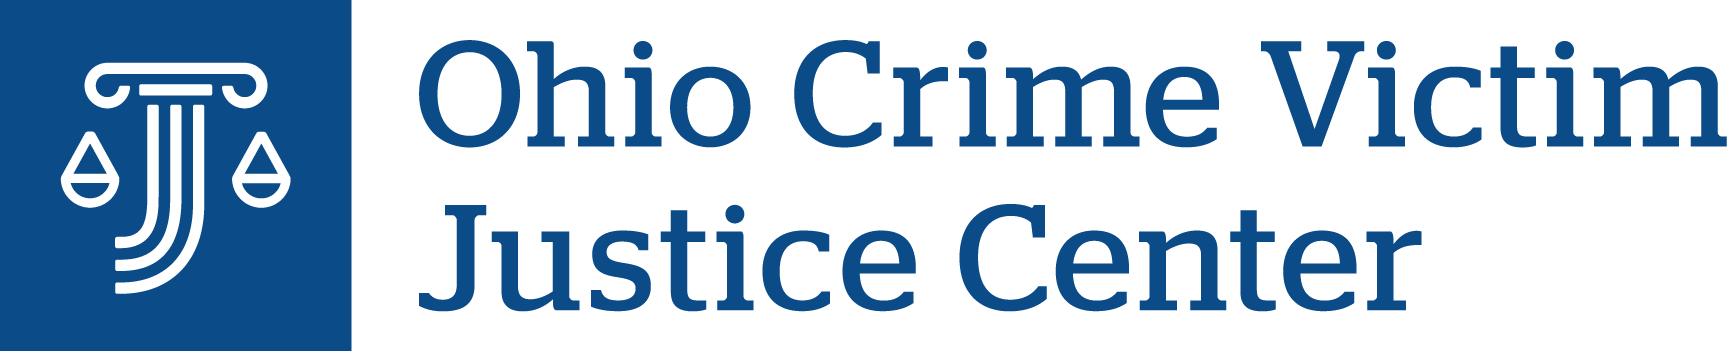 Ohio Crime Victim Justice Center Logo.png (19 kb)